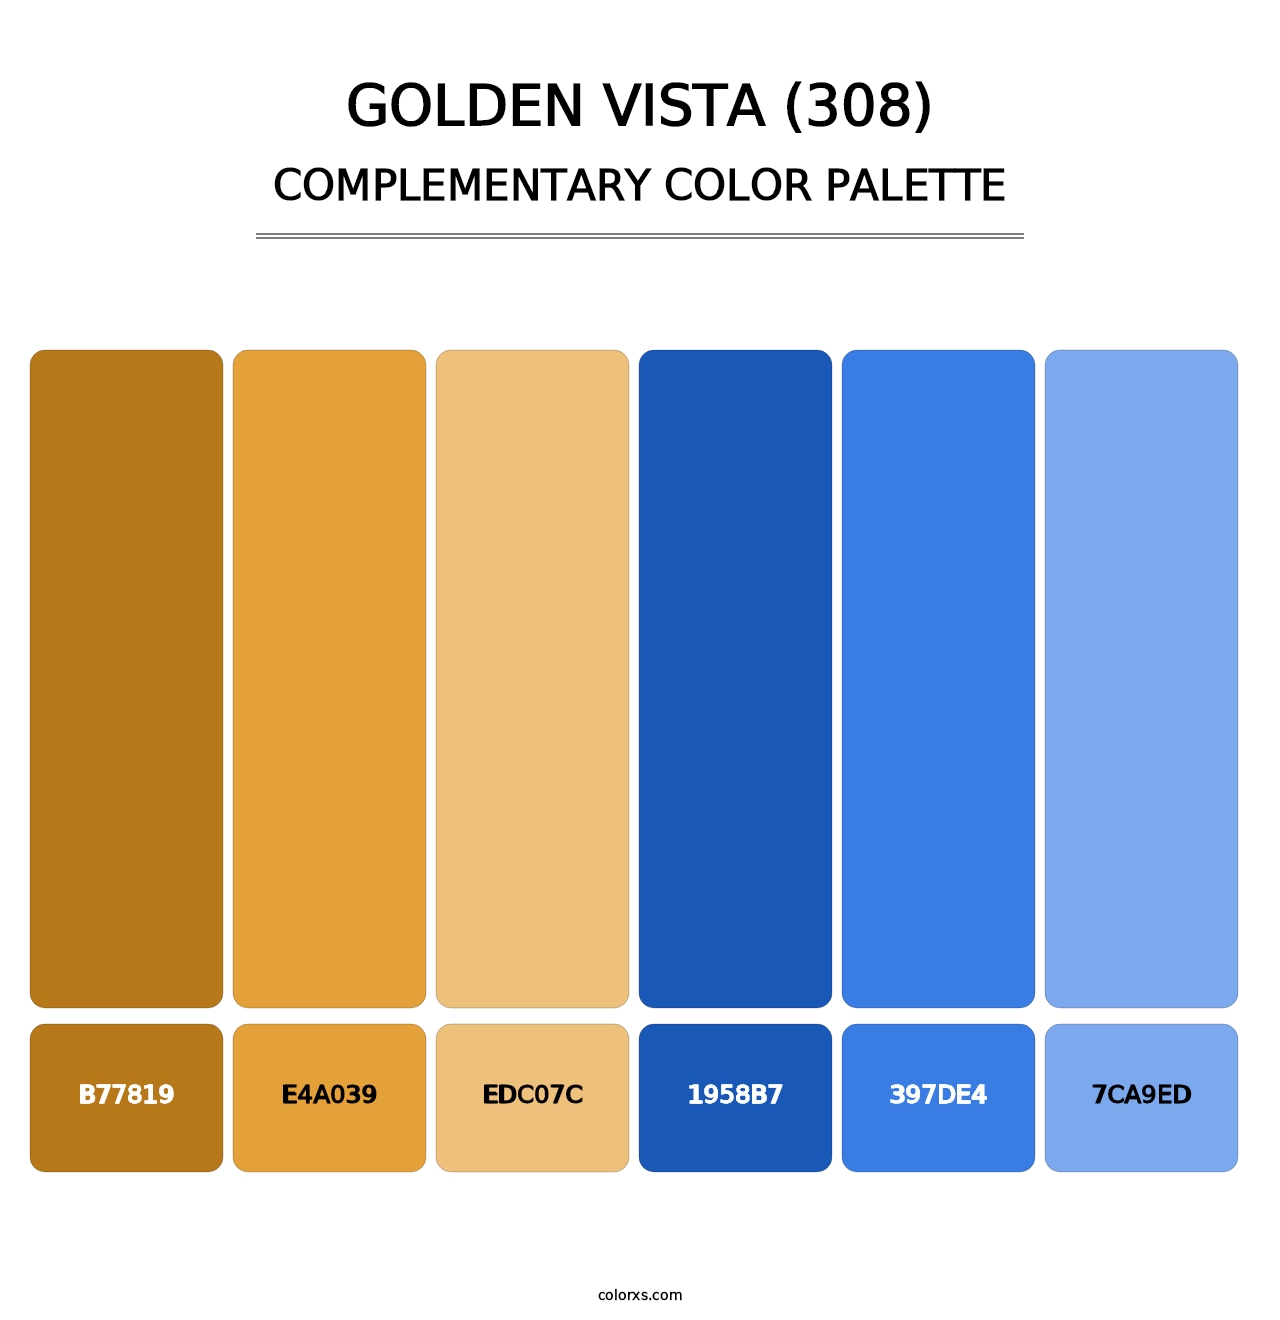 Golden Vista (308) - Complementary Color Palette